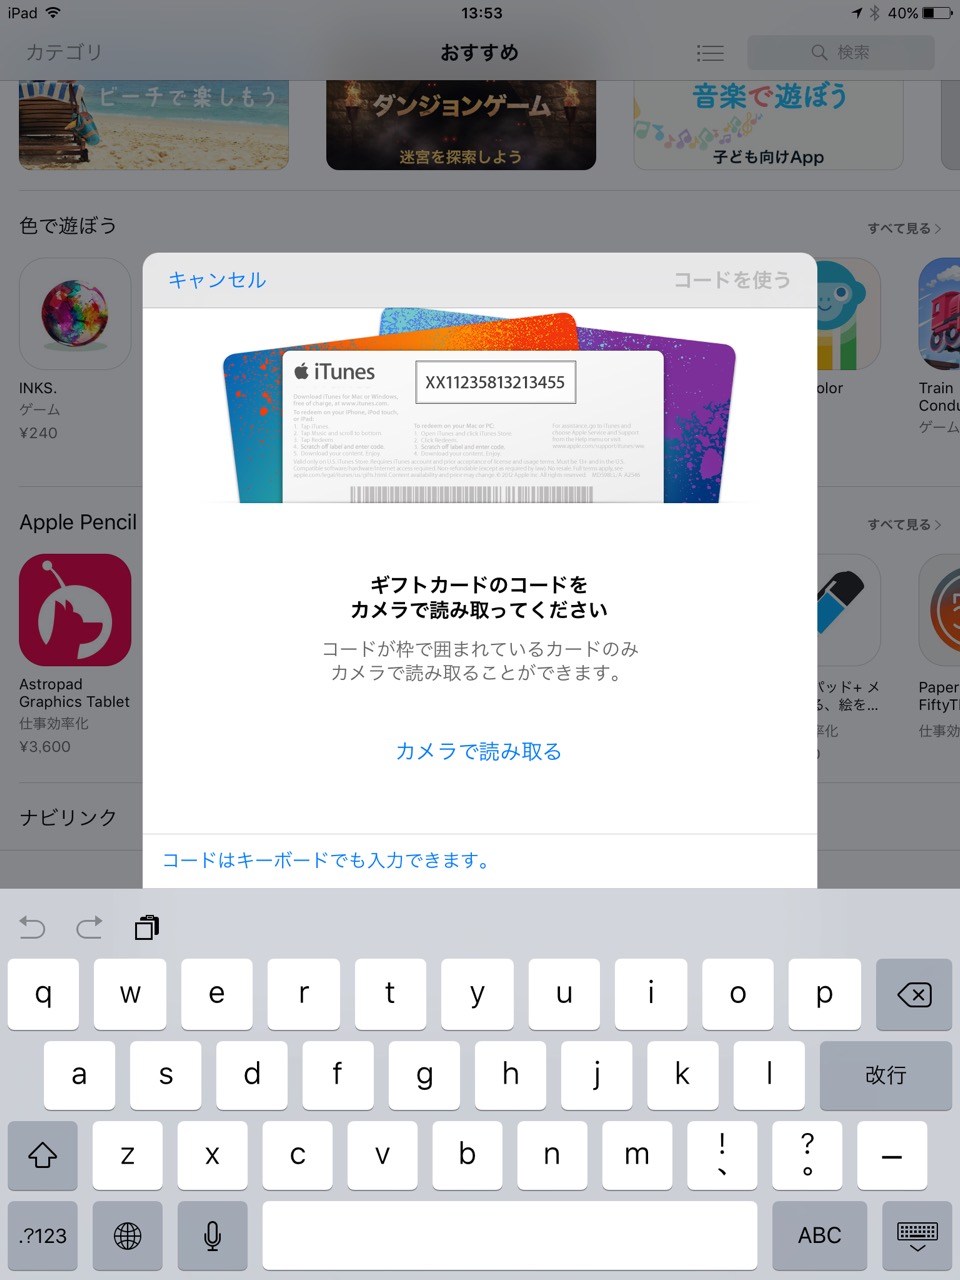 App Store3